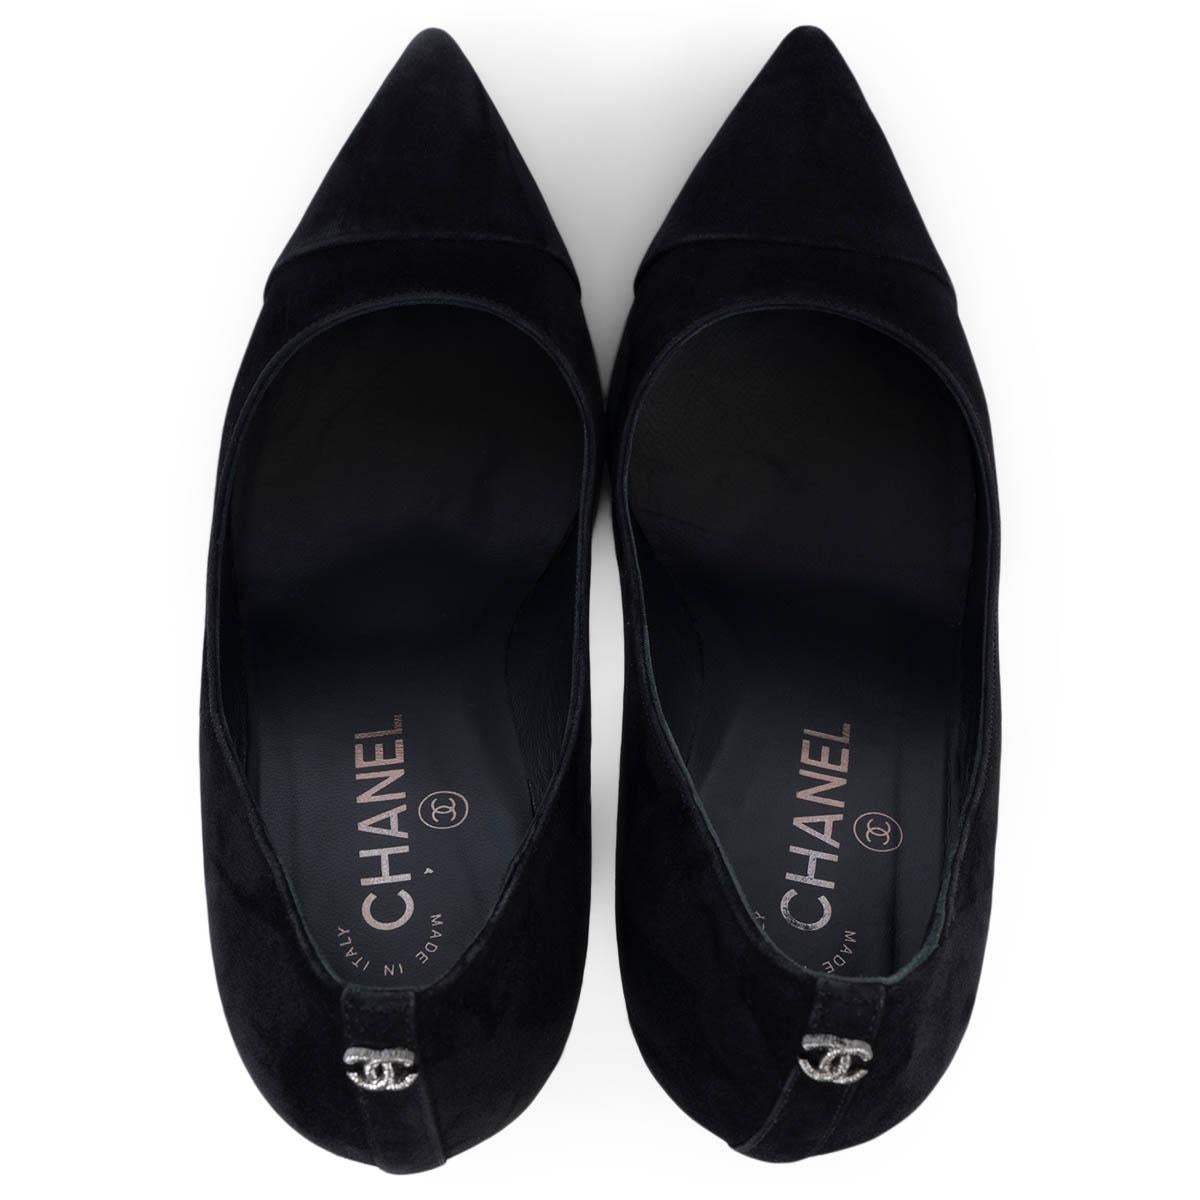 CHANEL black suede POINTE TOE Pumps Shoes 38.5 For Sale 2